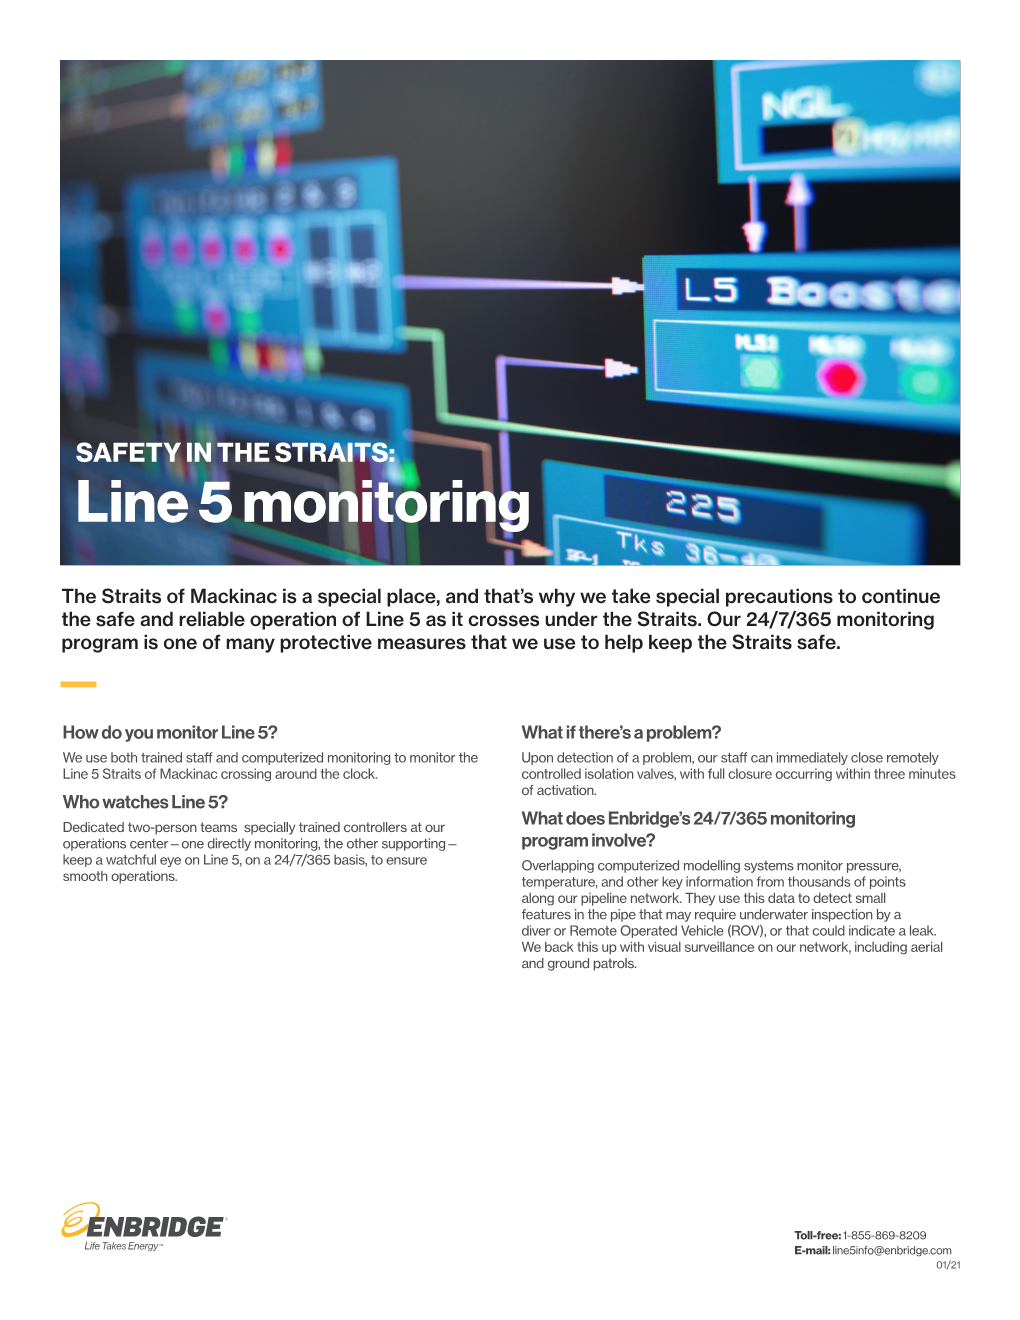 Line 5 Monitoring